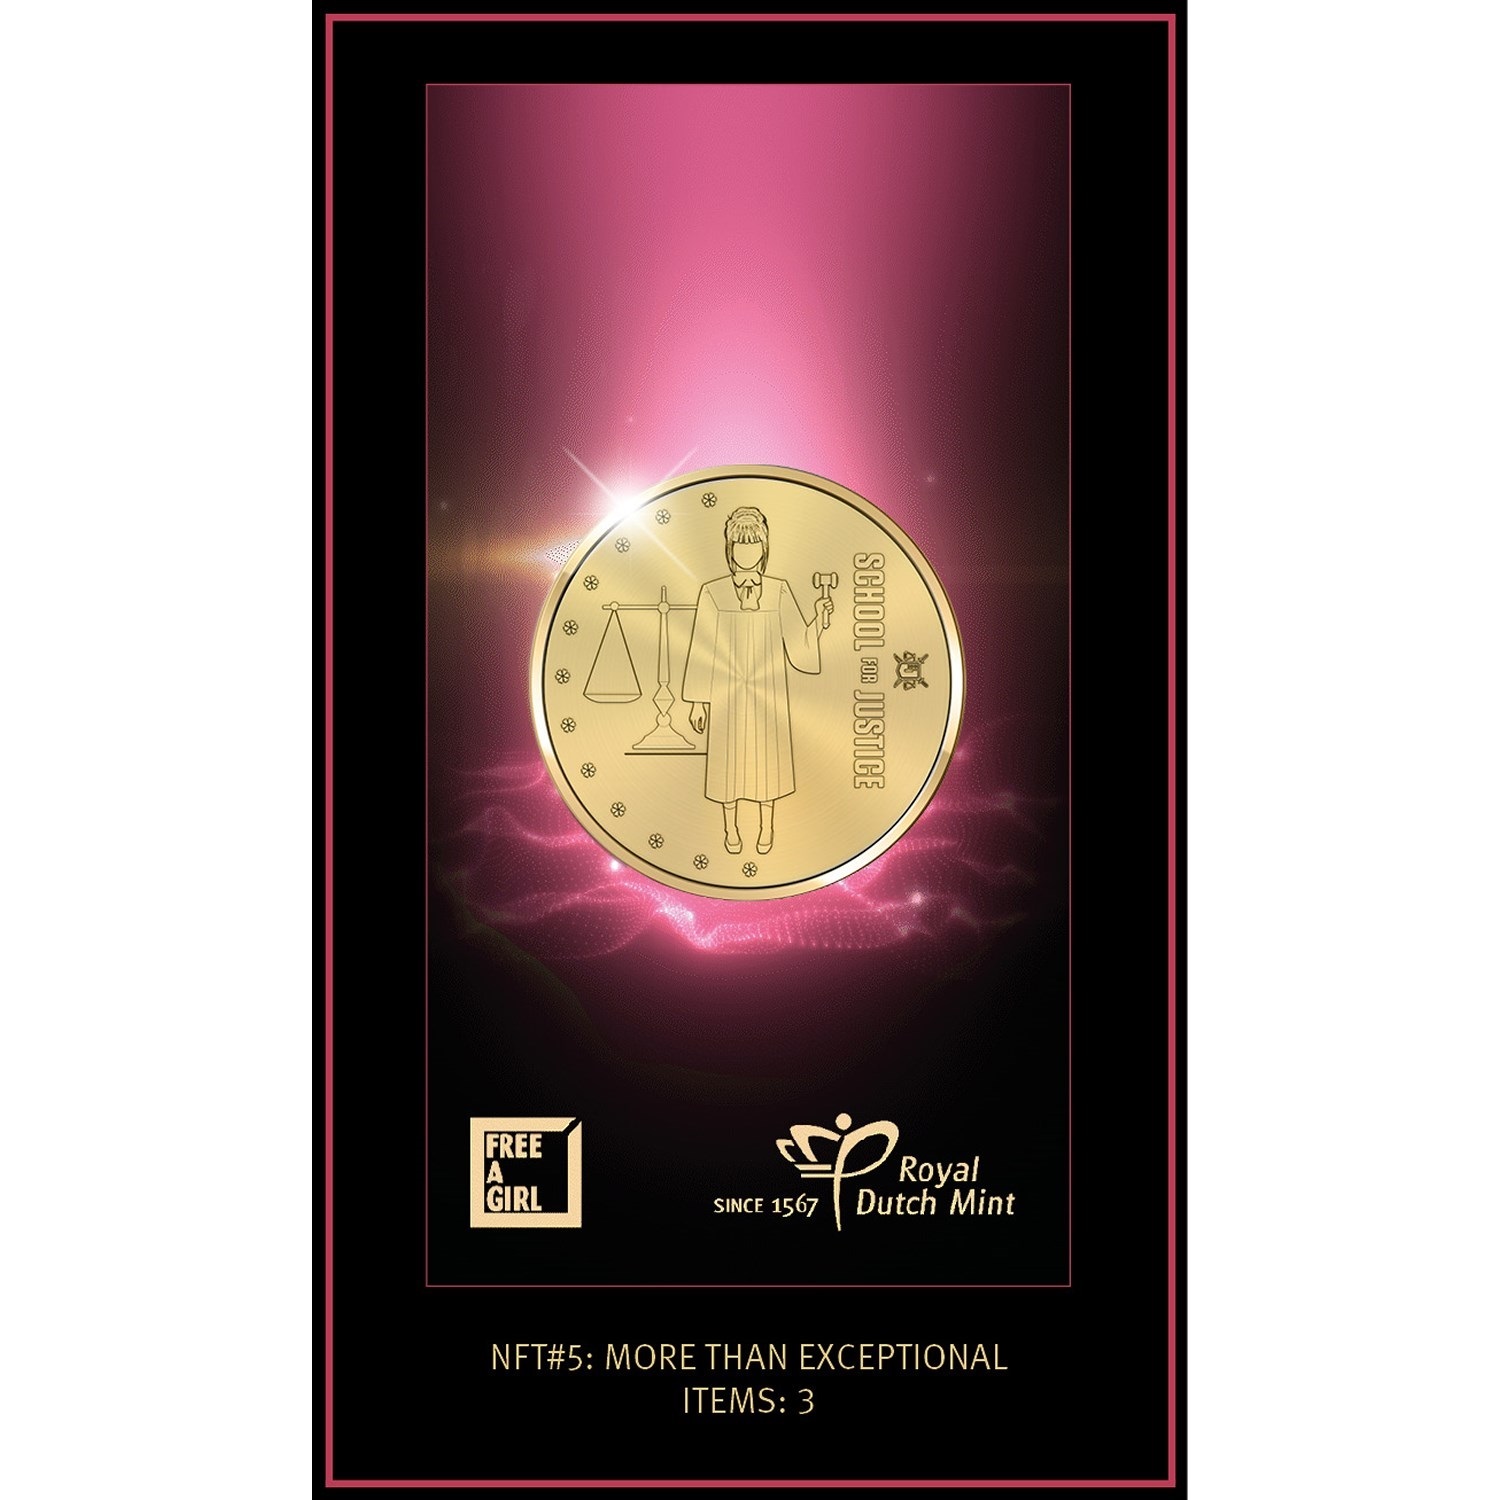 (MED14.Méd.KNM.2023.0117694) BU copper-nickel medal - Free a girl (NFT#5) (zoom)